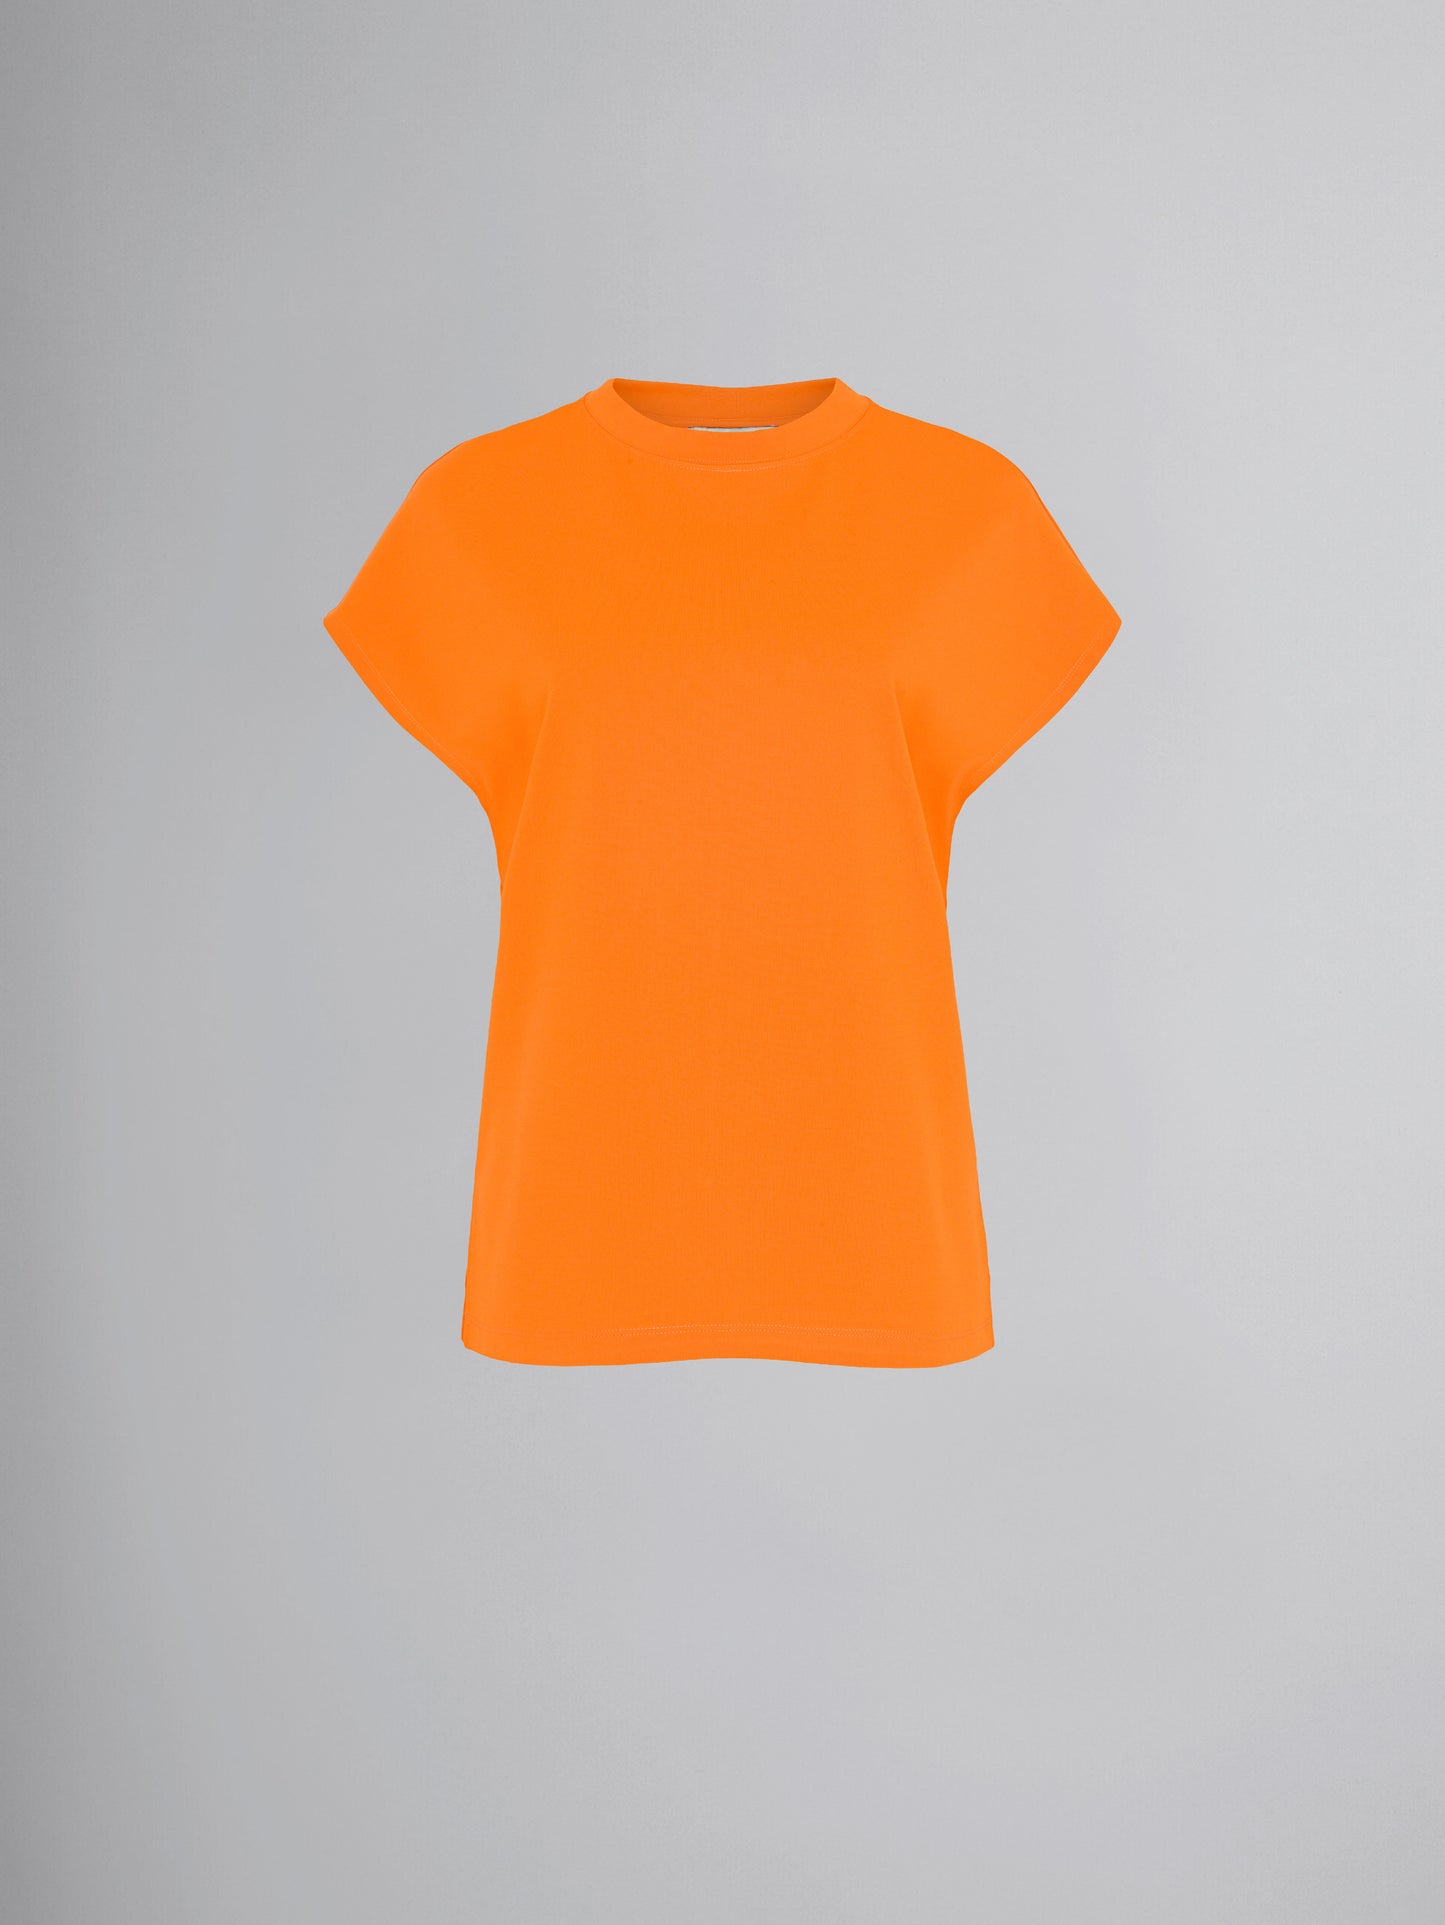 The color Shirt - orange